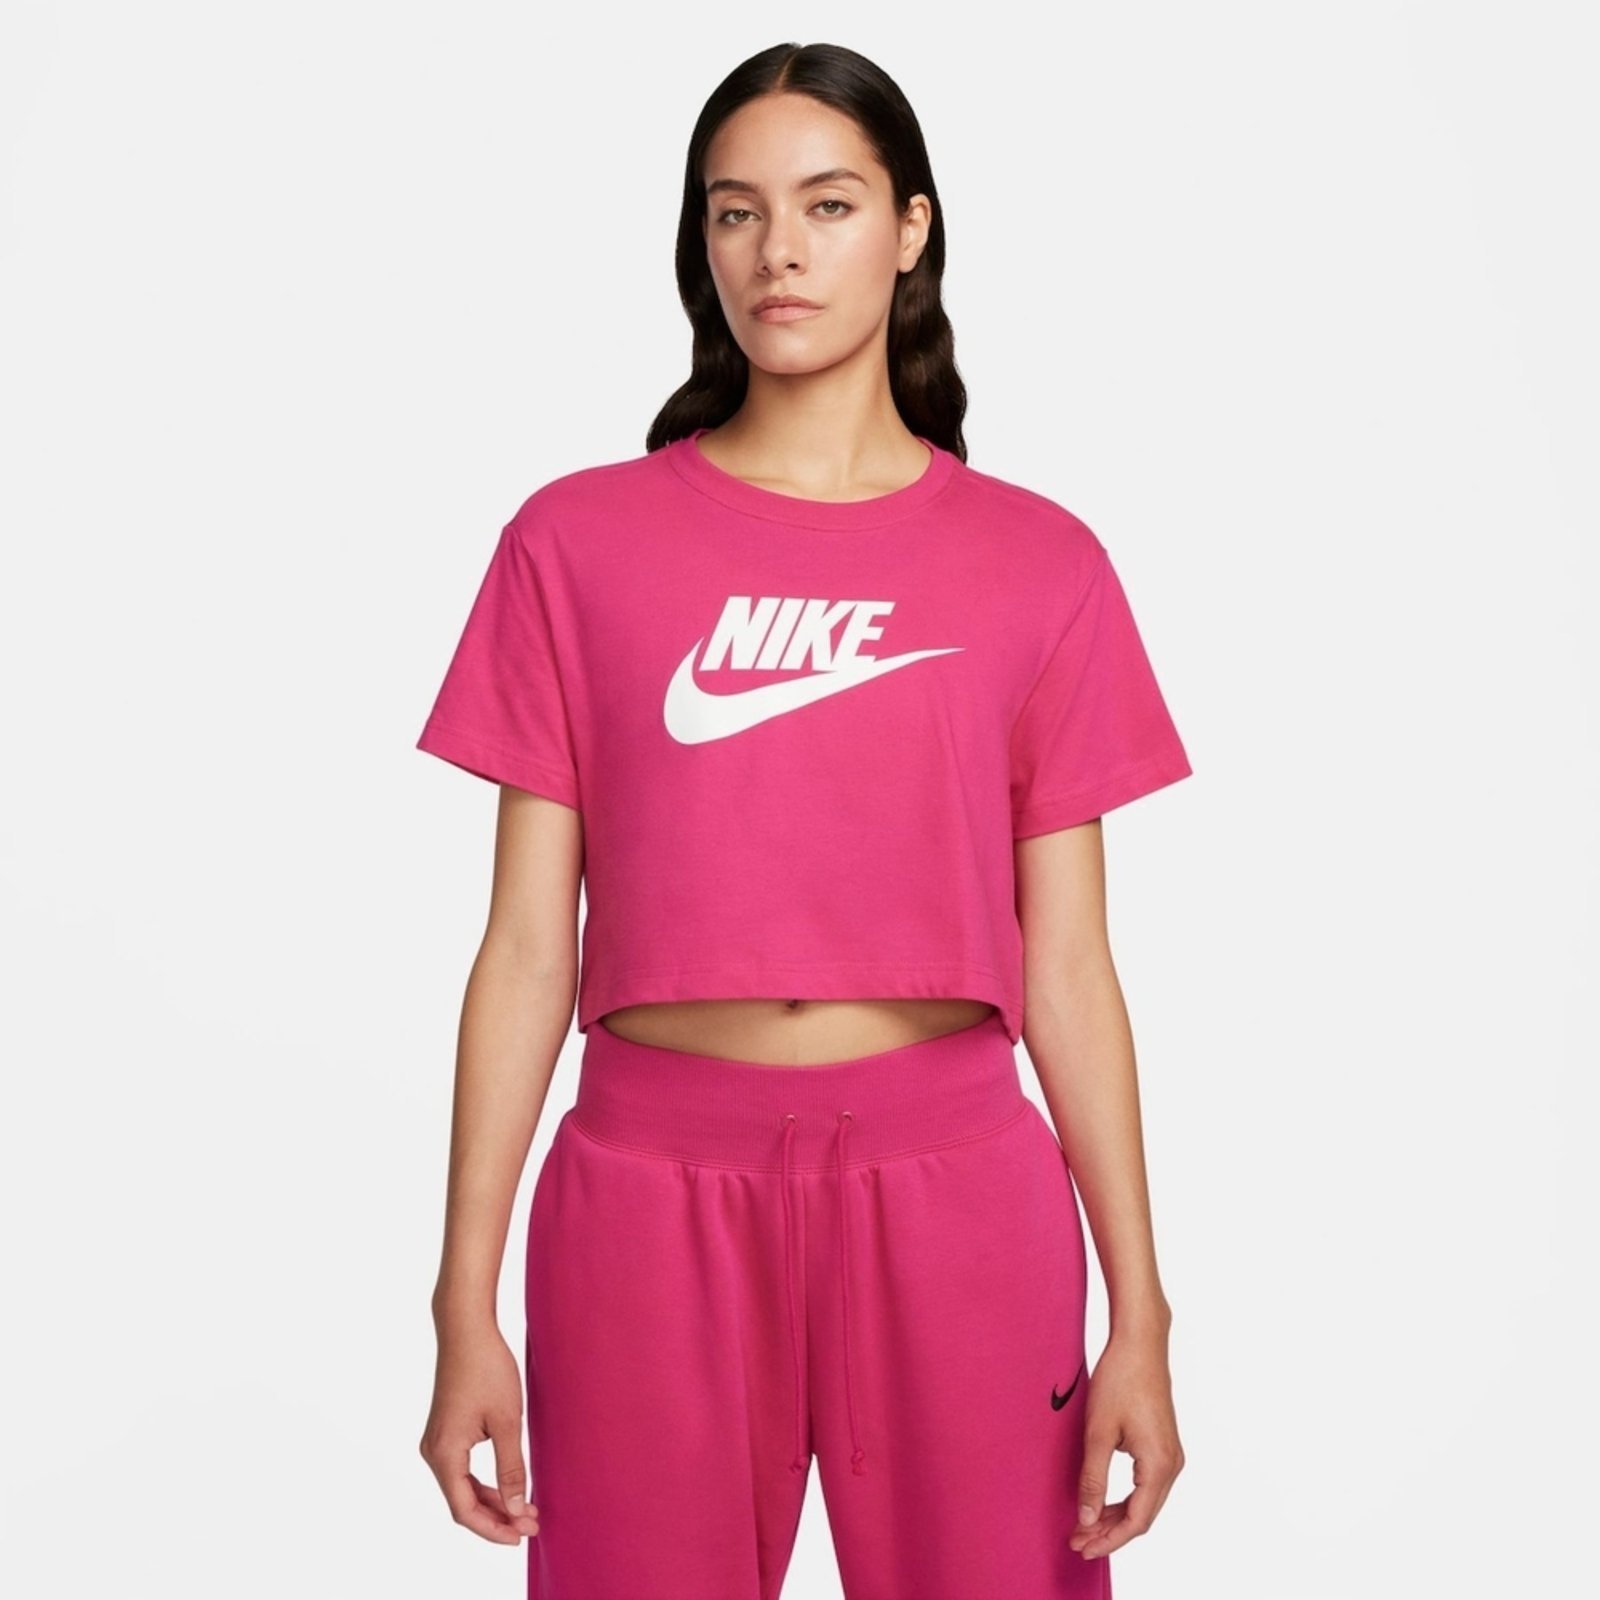 https://static.dafiti.com.br/p/Nike-Camiseta-Nike-Sportswear-Essential-Feminina-4231-42191831-1-zoom.jpg